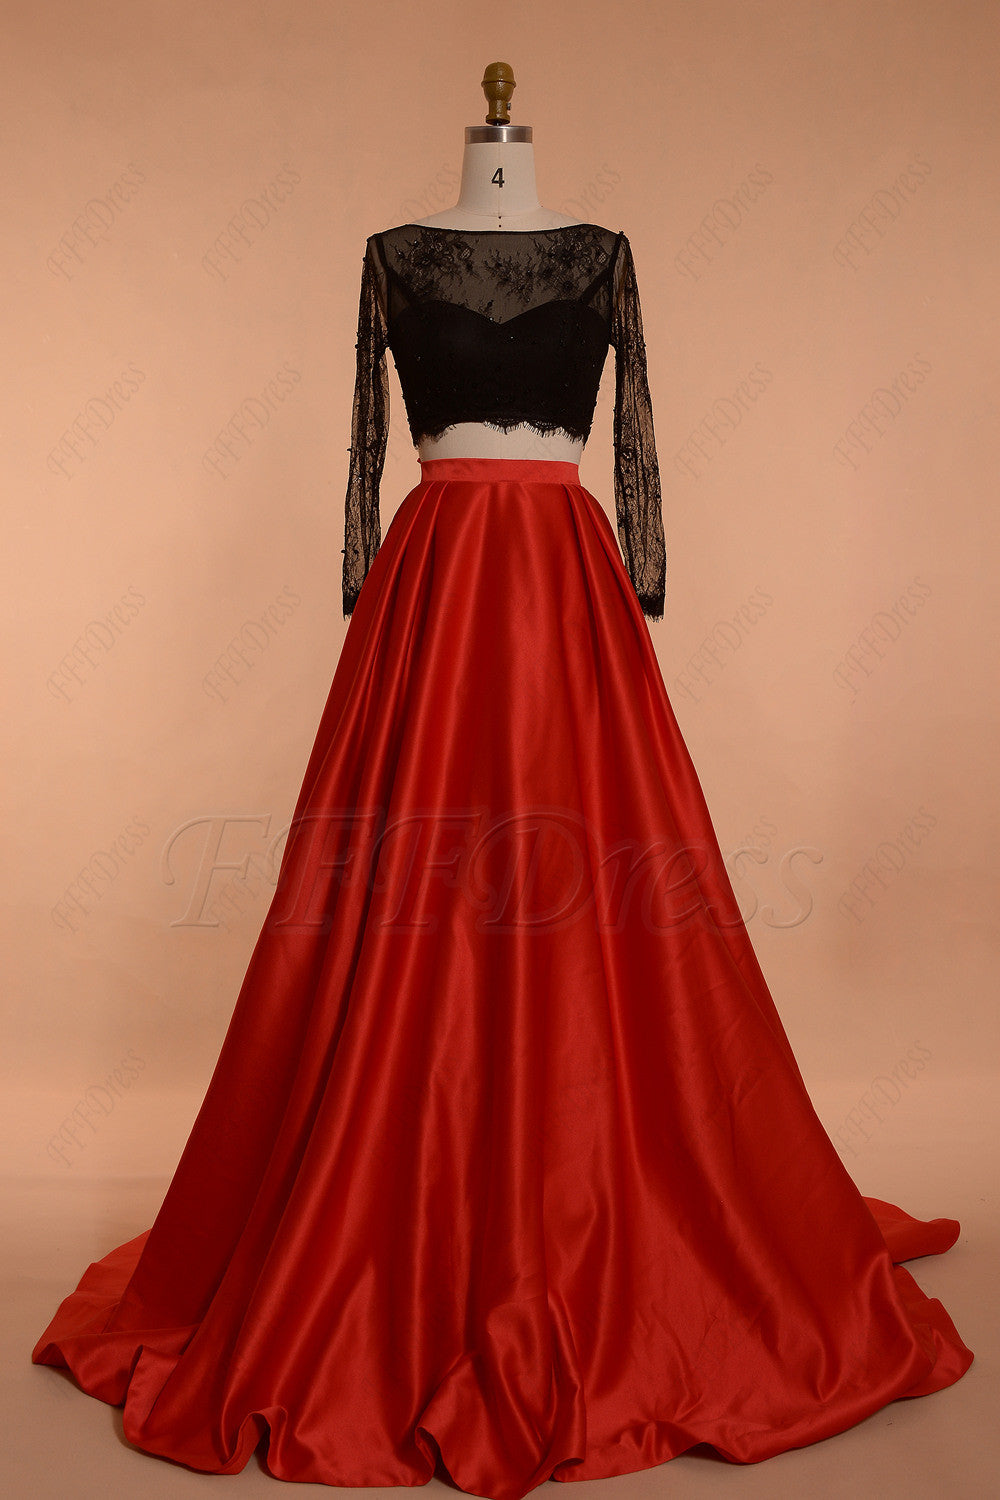 Black Gothic Wedding Dresses Long Sleeves High Neck Satin Bridal Ball Gowns  | eBay